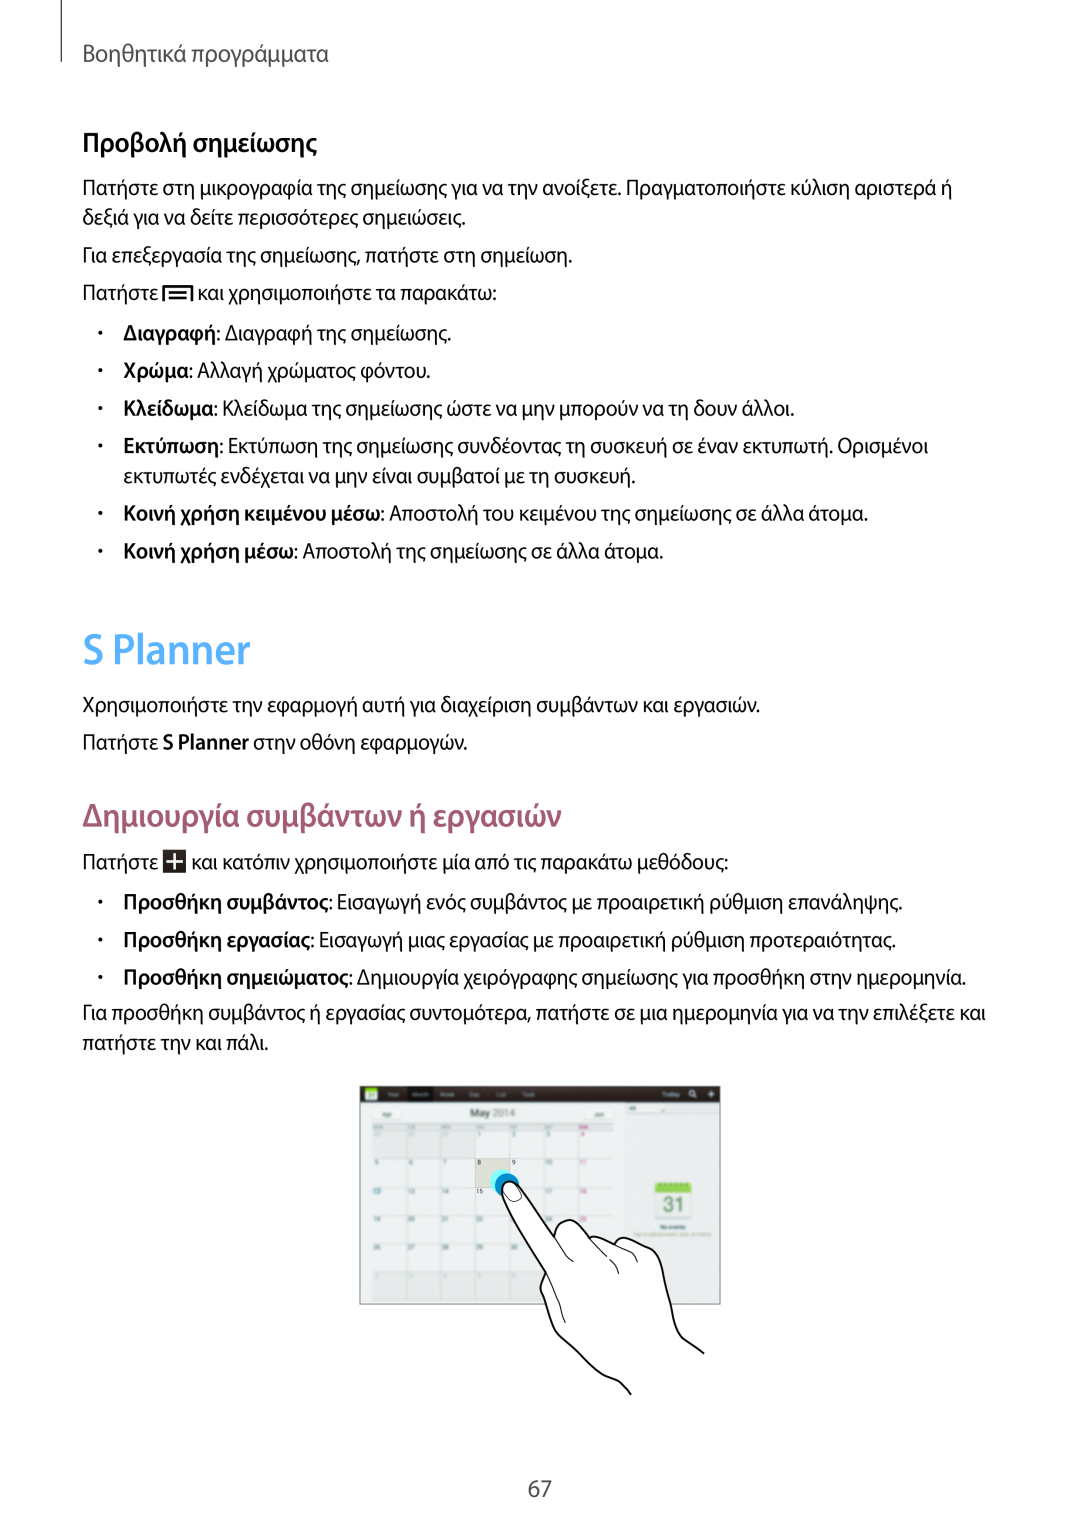 Samsung GT-P5210ZWAEUR manual S Planner, Δημιουργία συμβάντων ή εργασιών, Προβολή σημείωσης, Βοηθητικά προγράμματα 